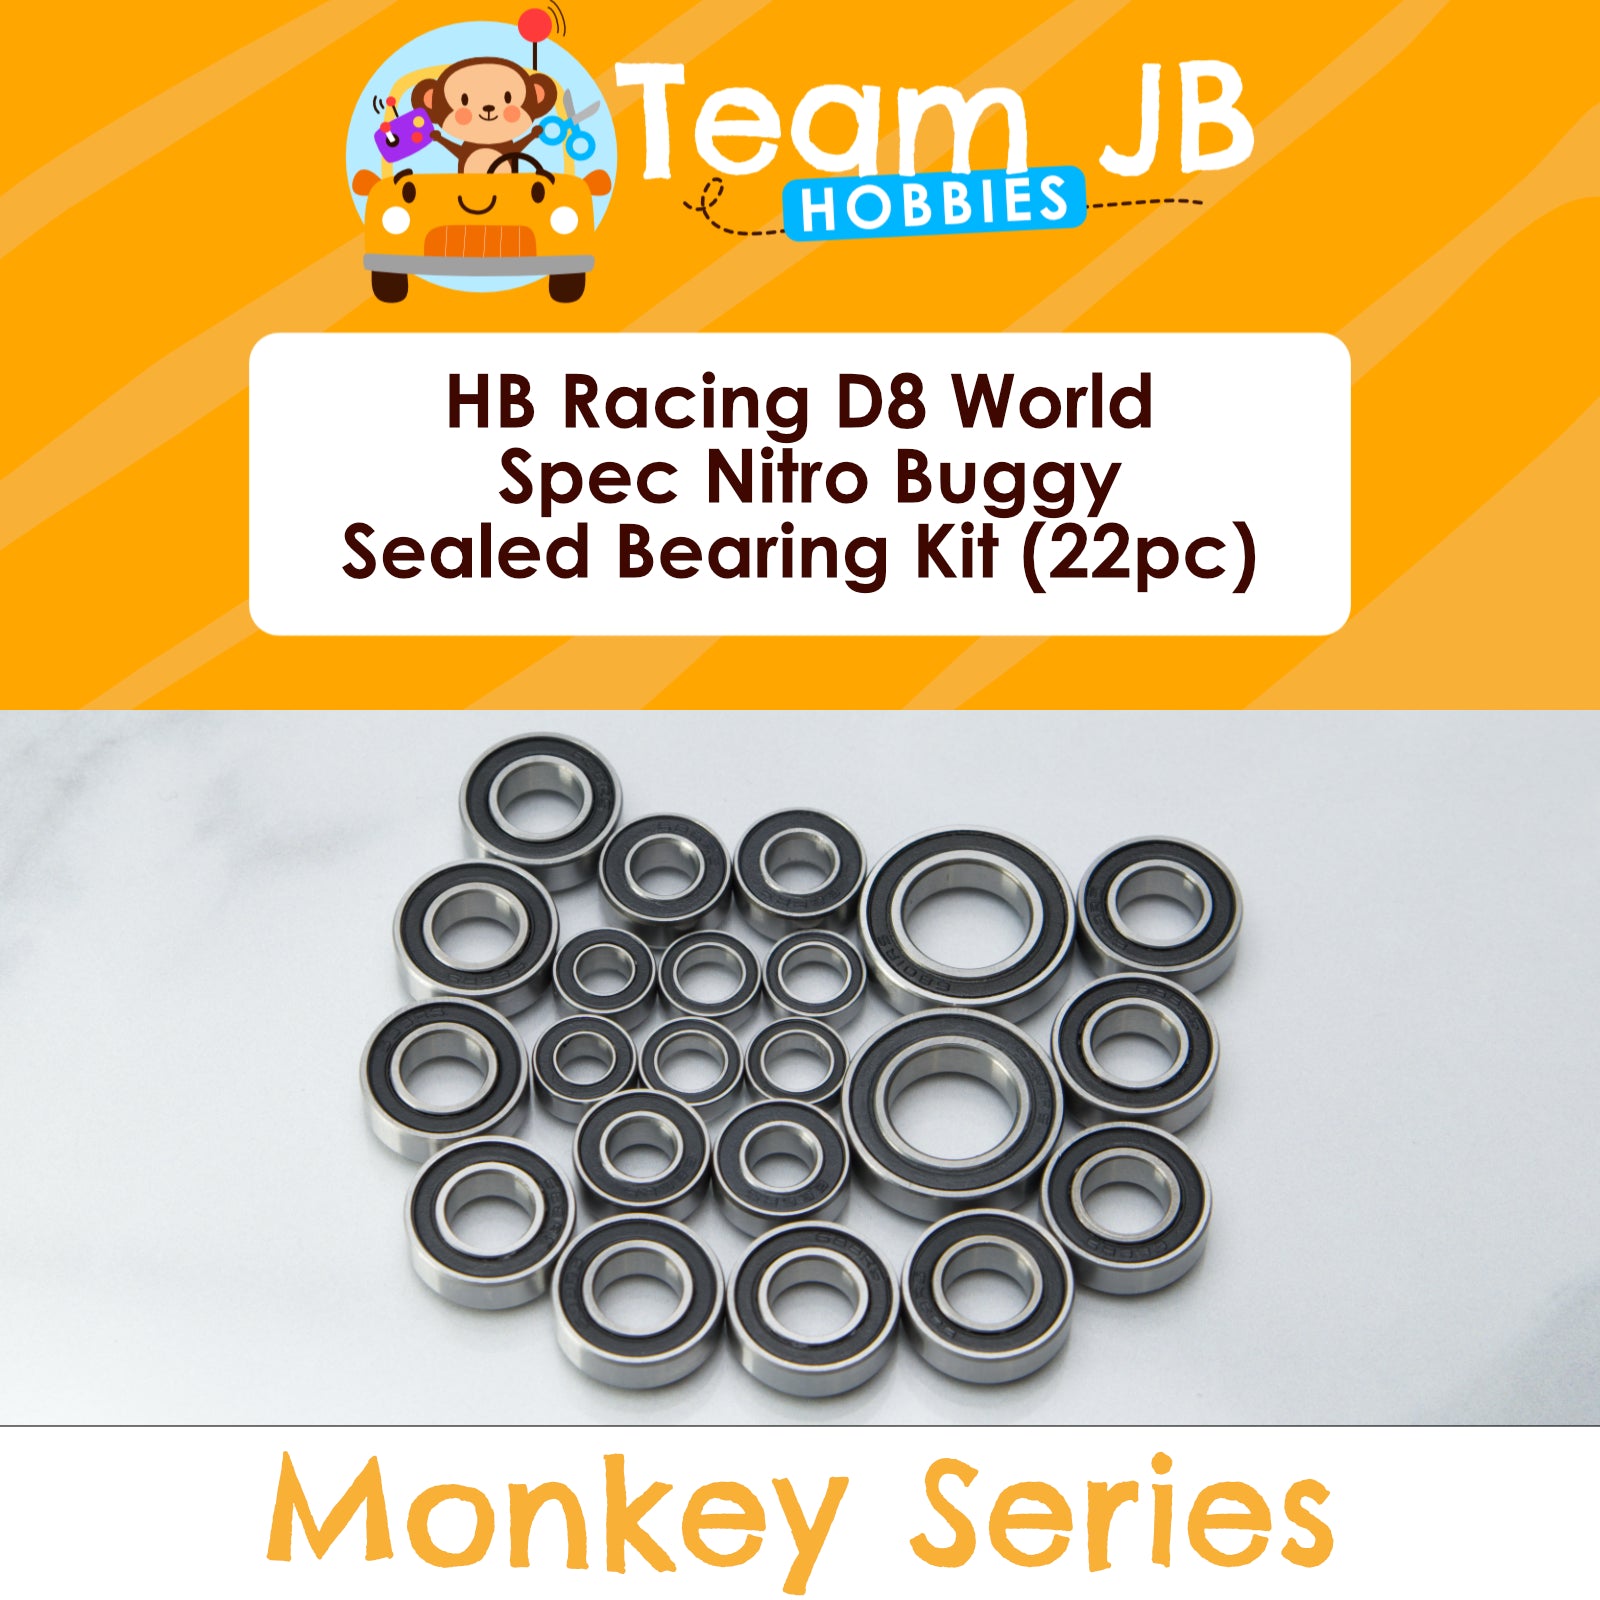 HB Racing D8 World Spec Nitro Buggy - Sealed Bearing Kit